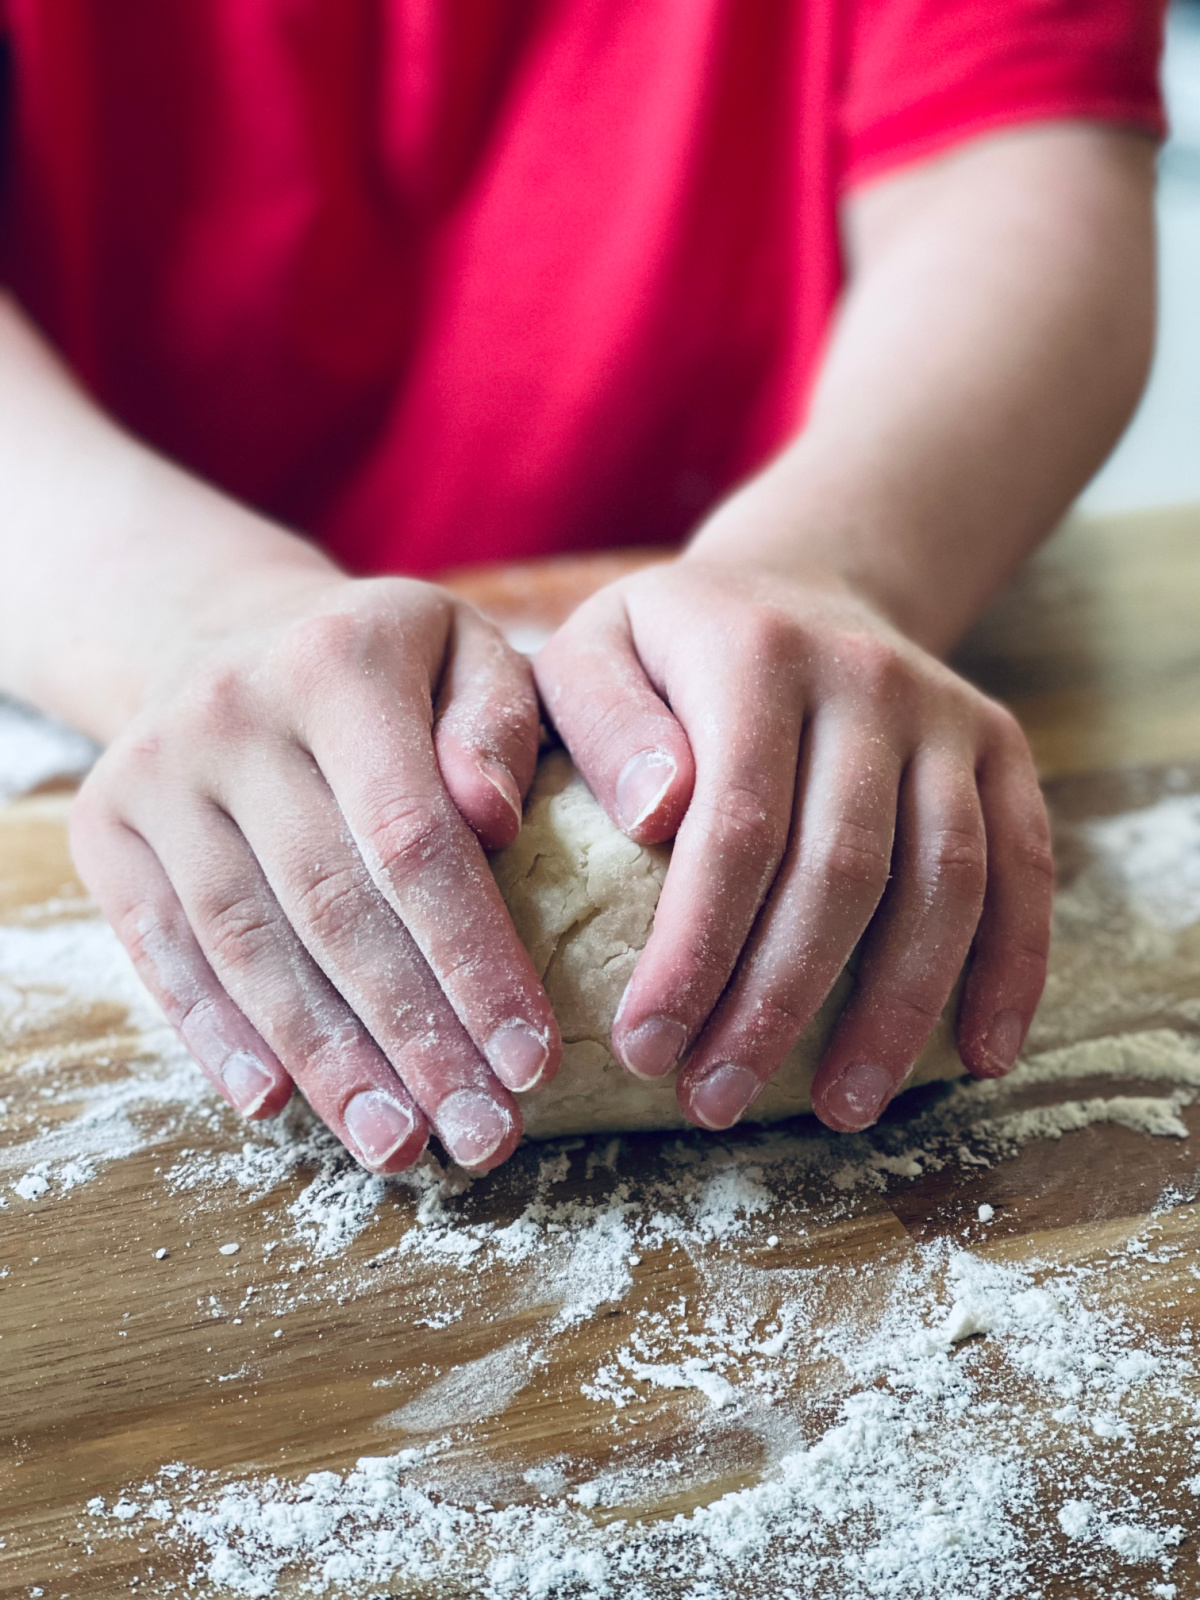 unschooled child's hands kneading pie dough.